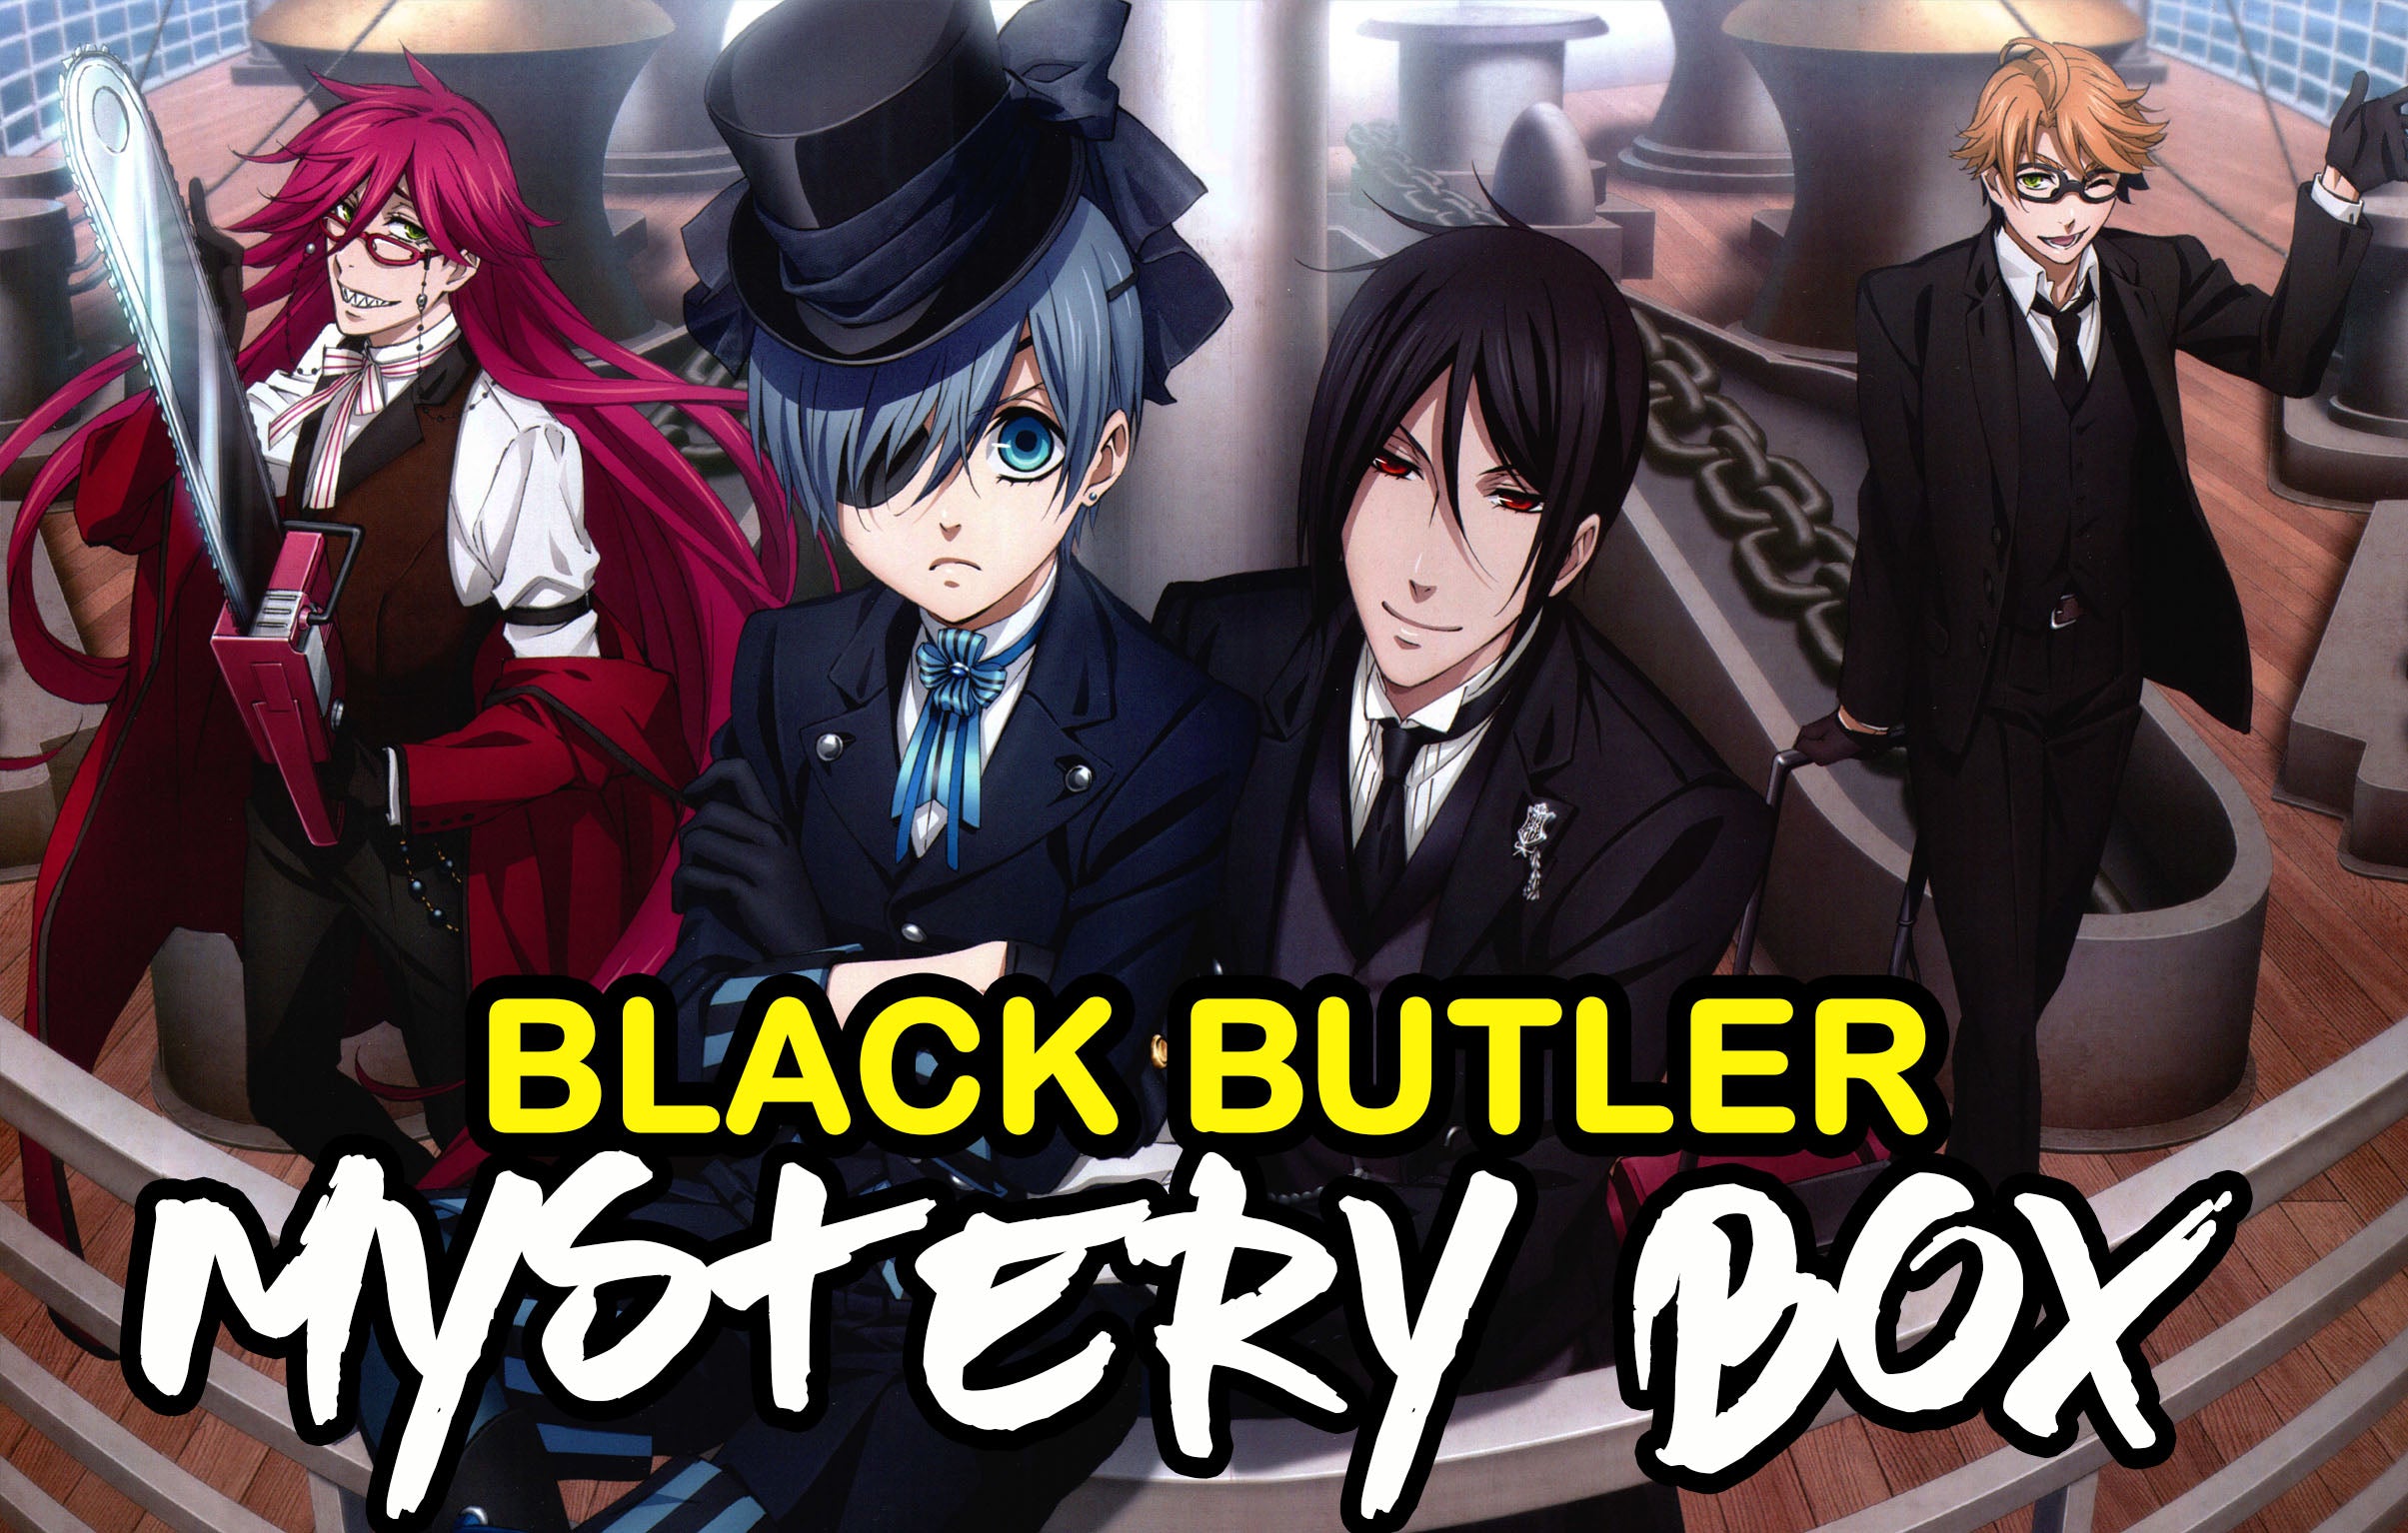 Black Butler Ciel Phantomhive Anime Character Dakimakura, others